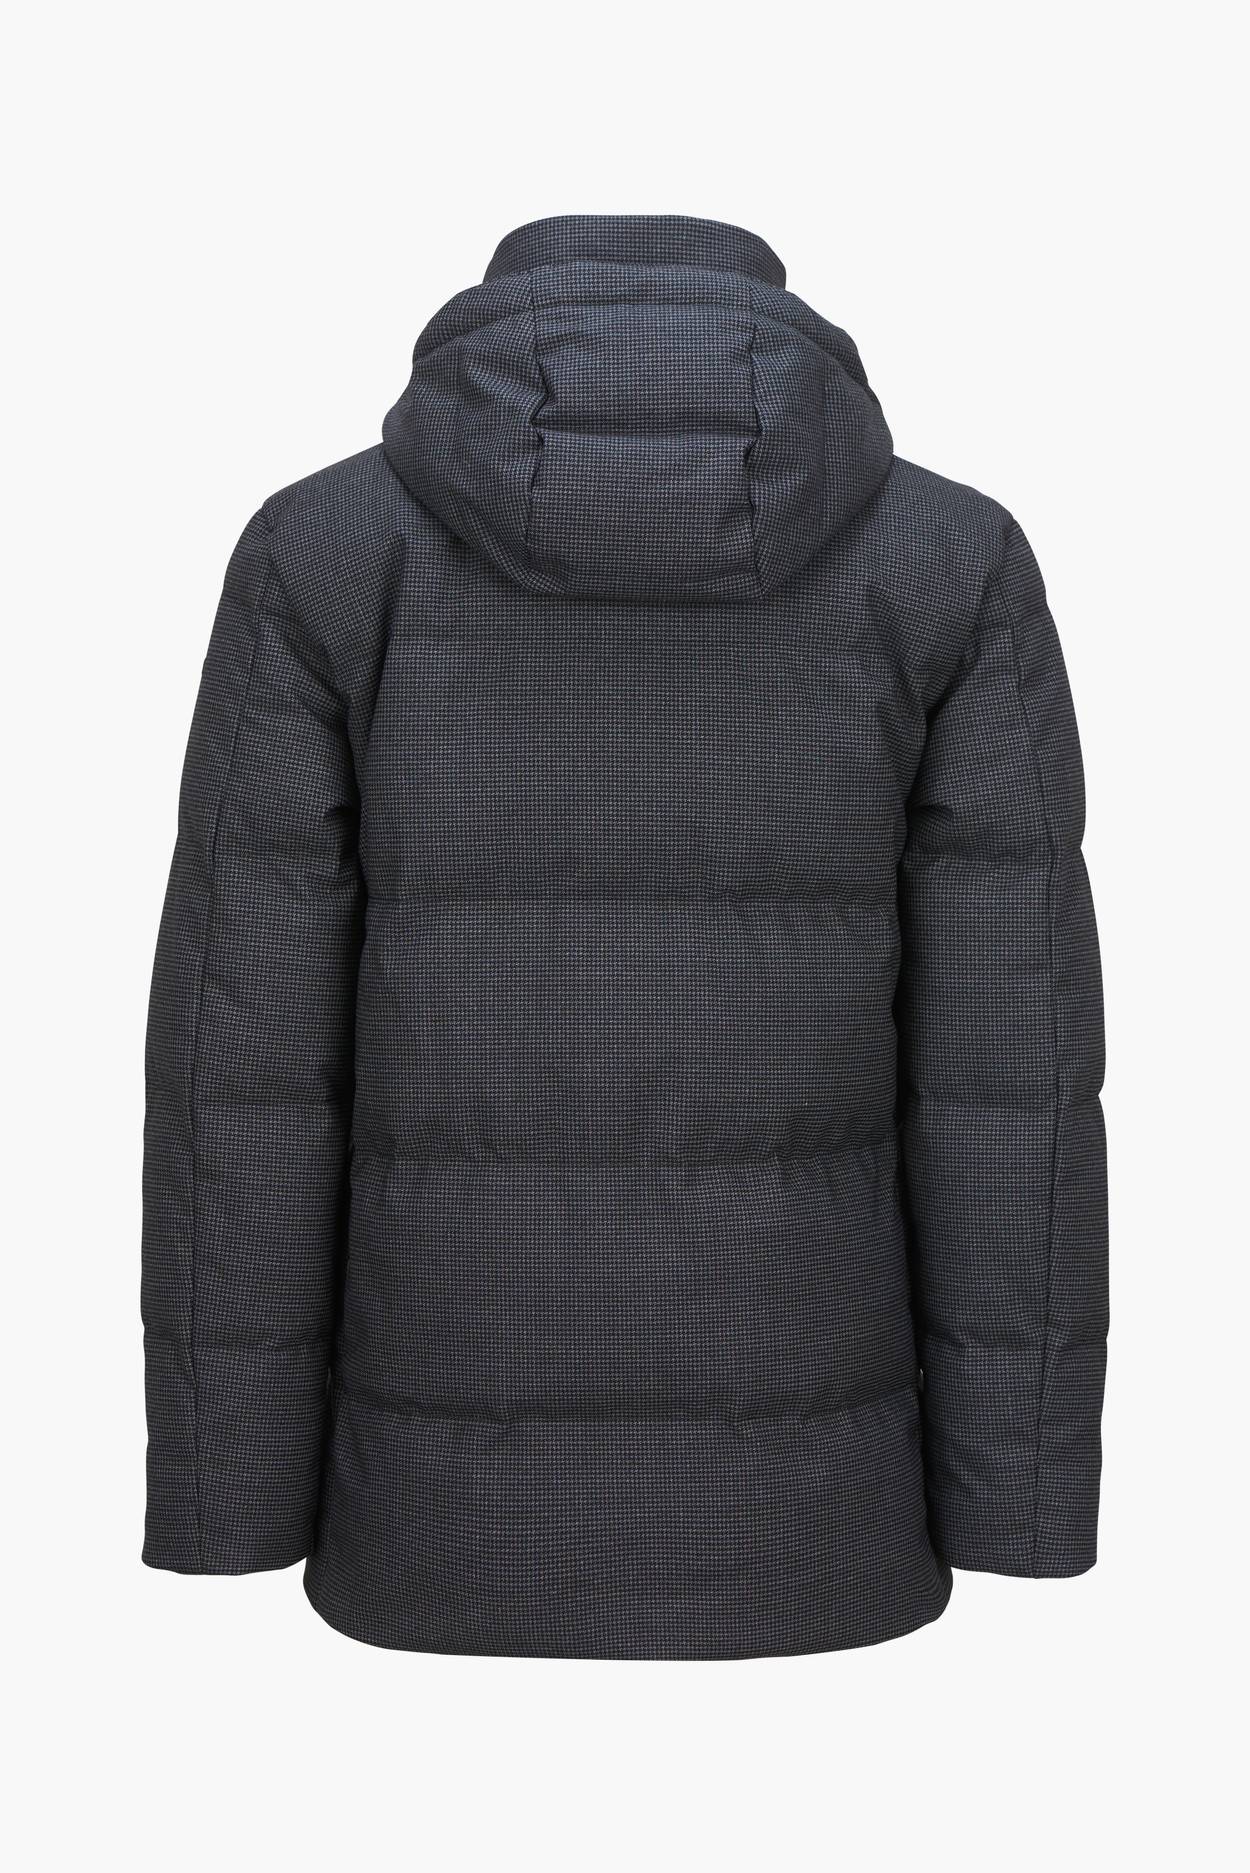 Copenhagen Jacket Wool